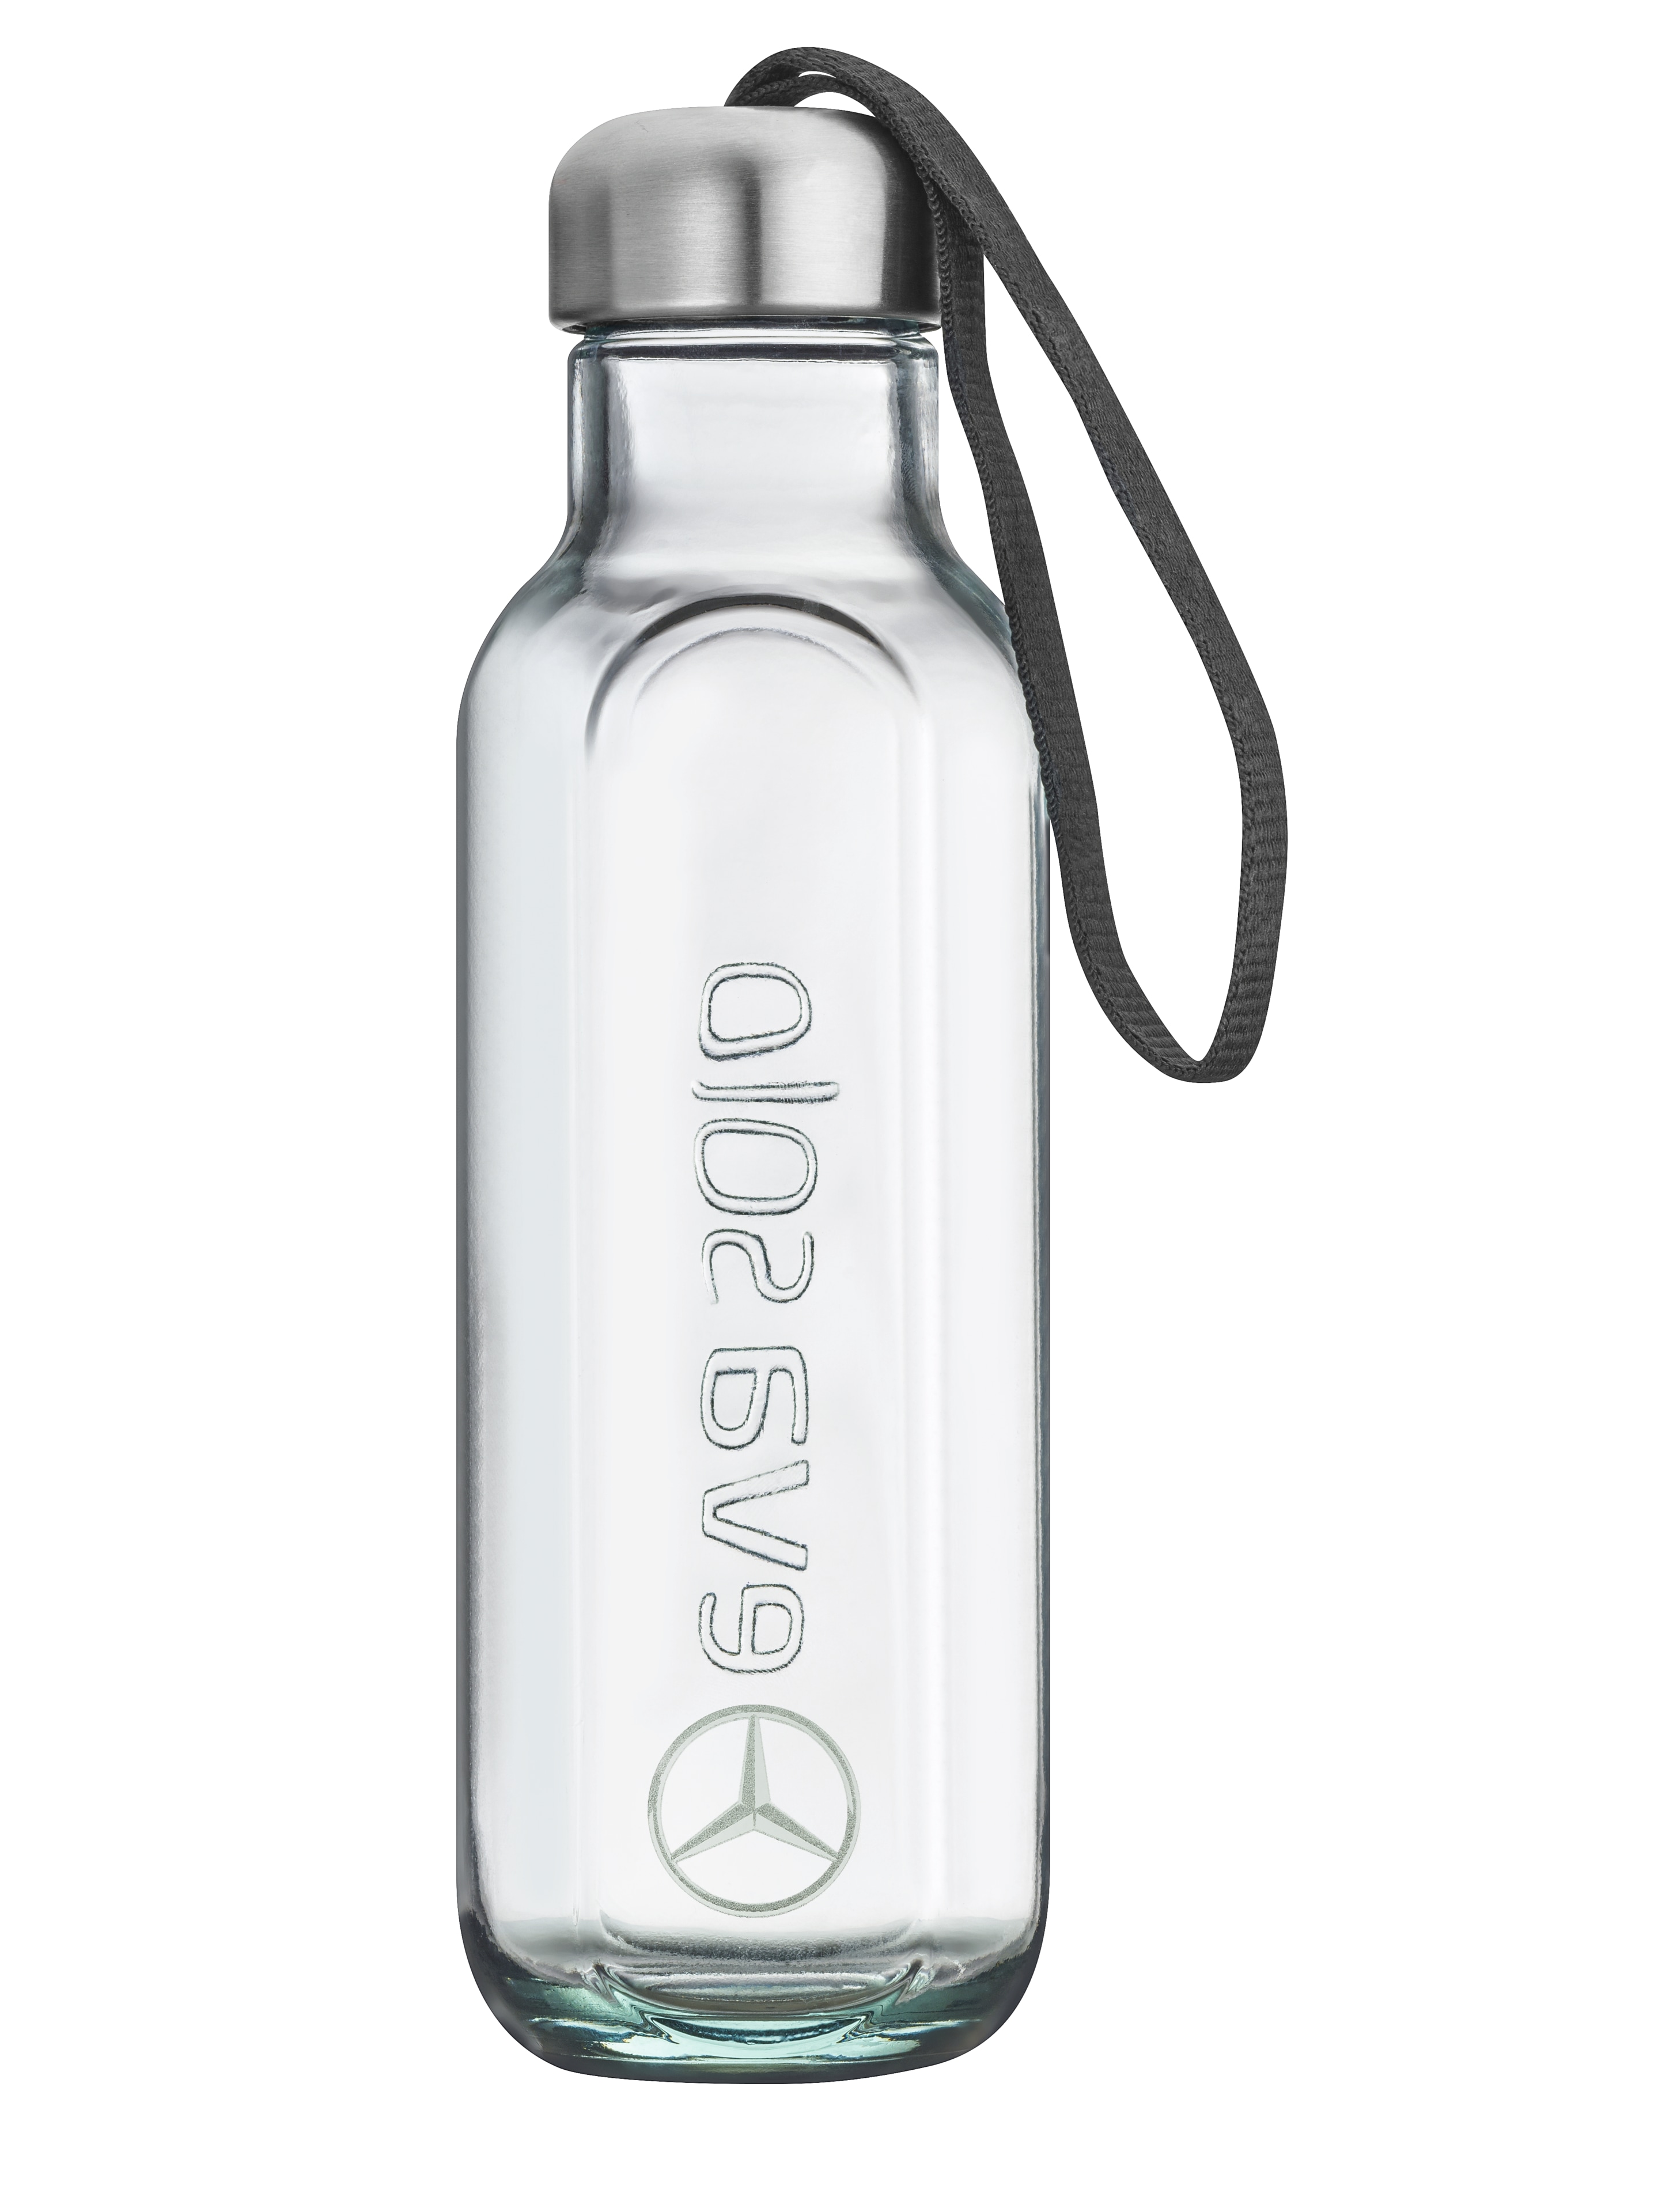 Glastrinkflasche - Glas / Edelstahl / Kunststoff, 500 ml, eva solo